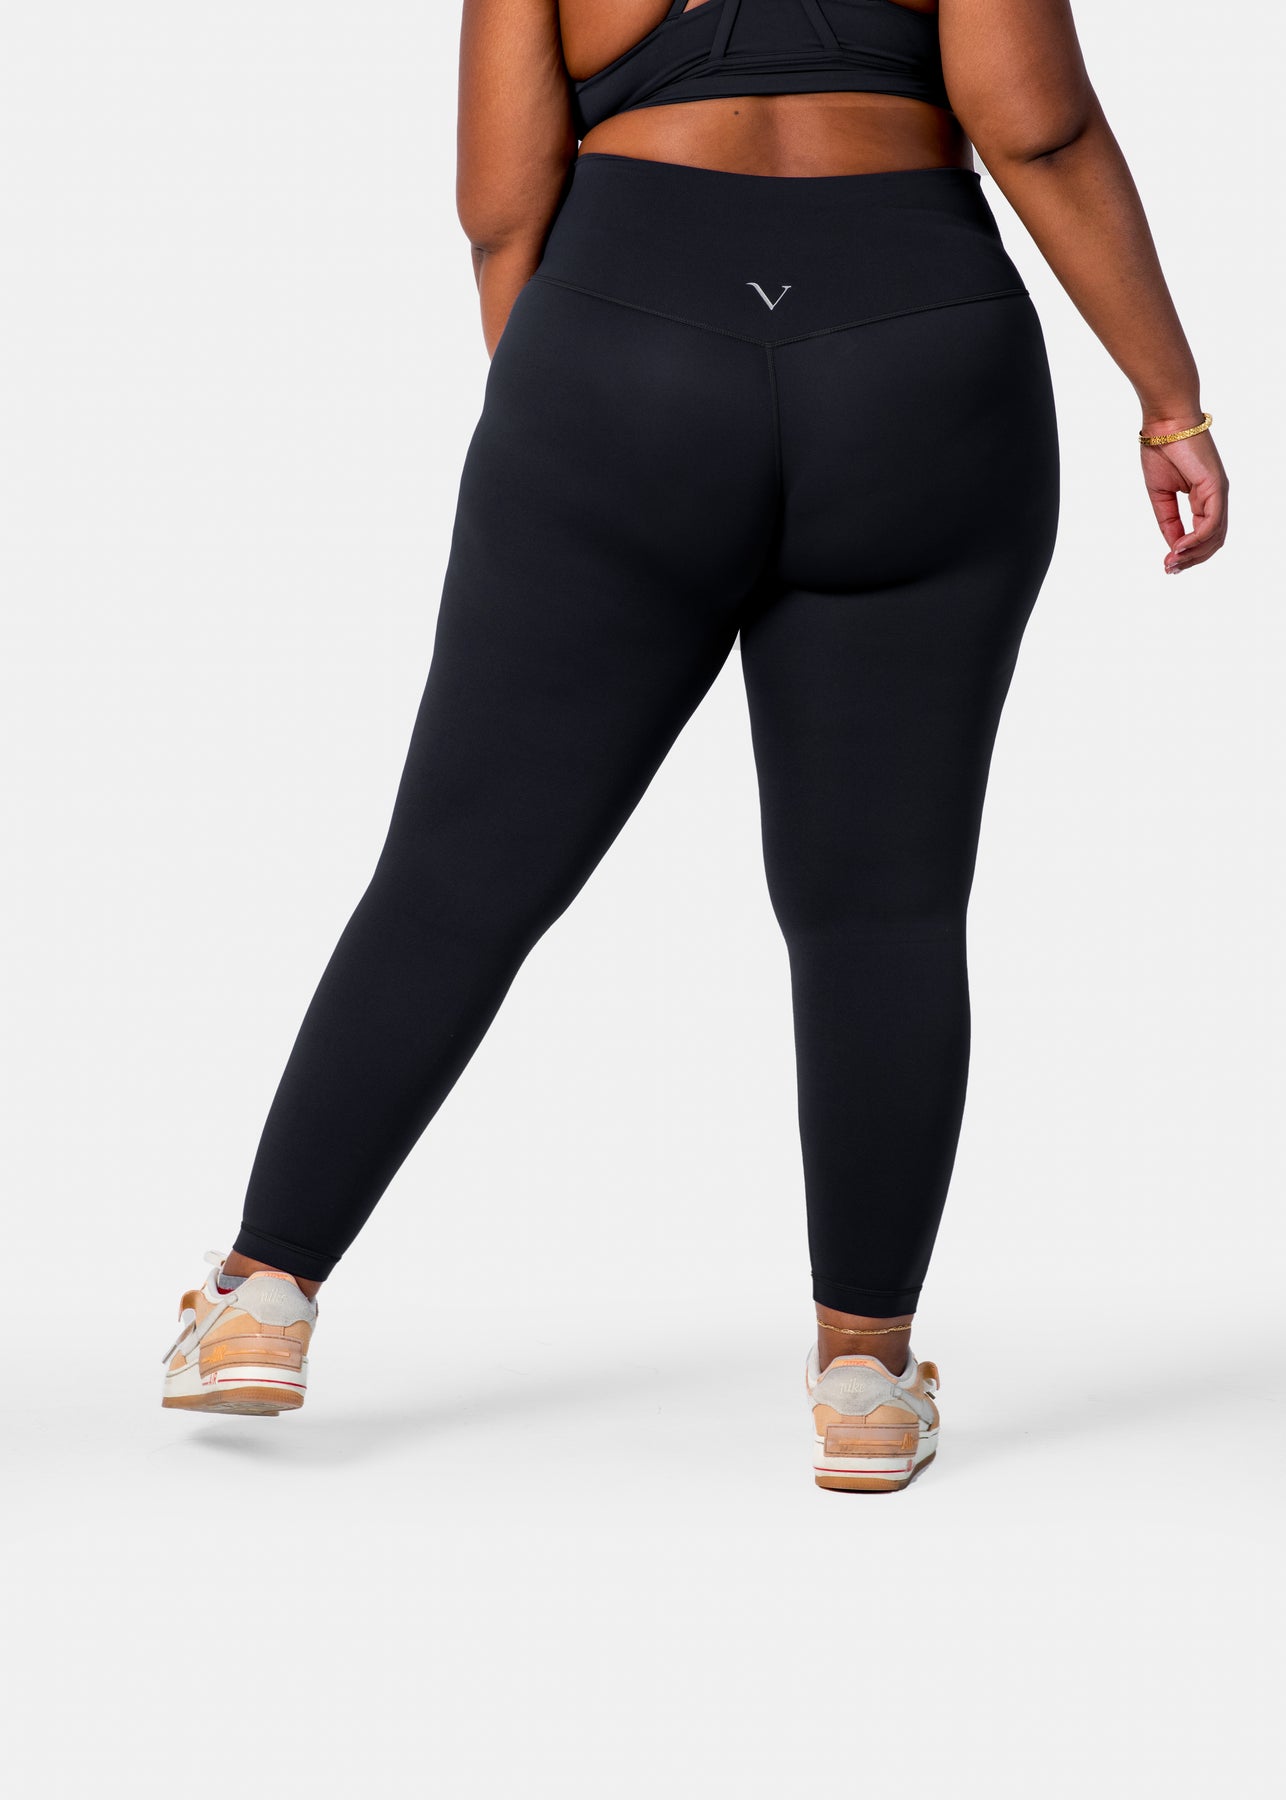 One Step Ahead High Waist Supplex/Lycra Legging (X-Small) Black at   Women's Clothing store